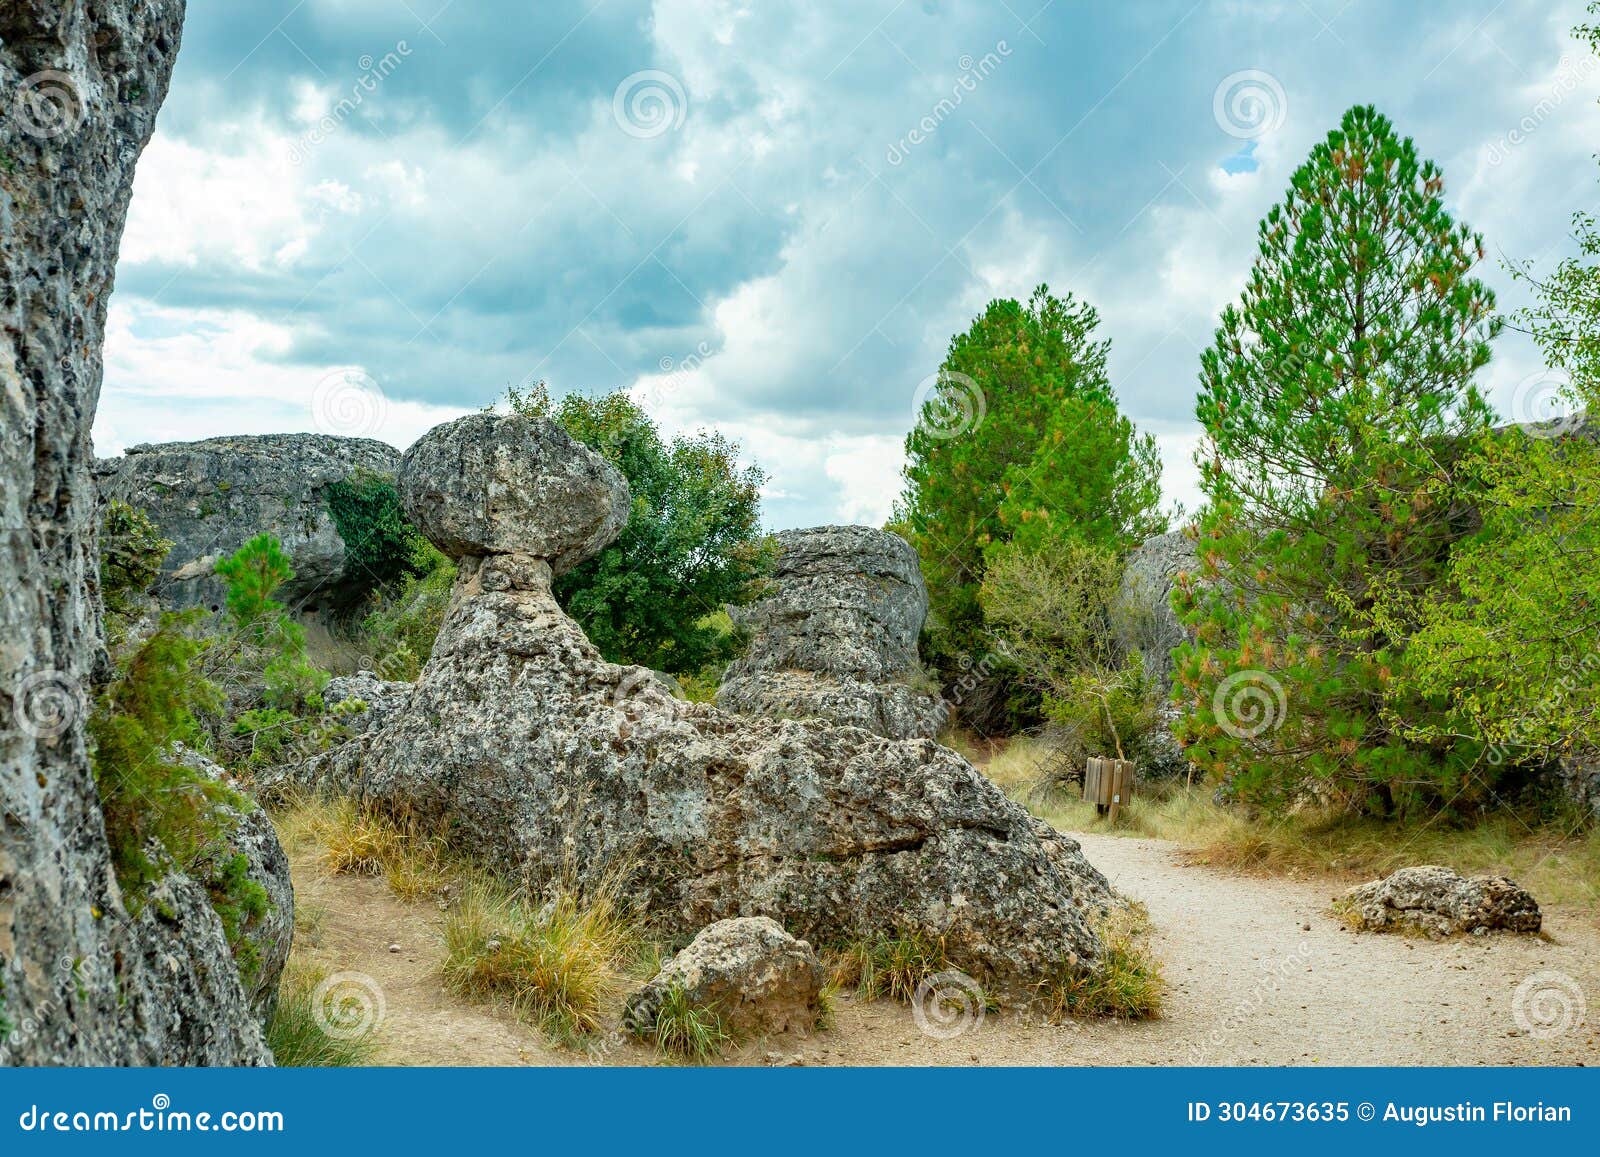 the ciudad encantada geological site near cuenca, spain